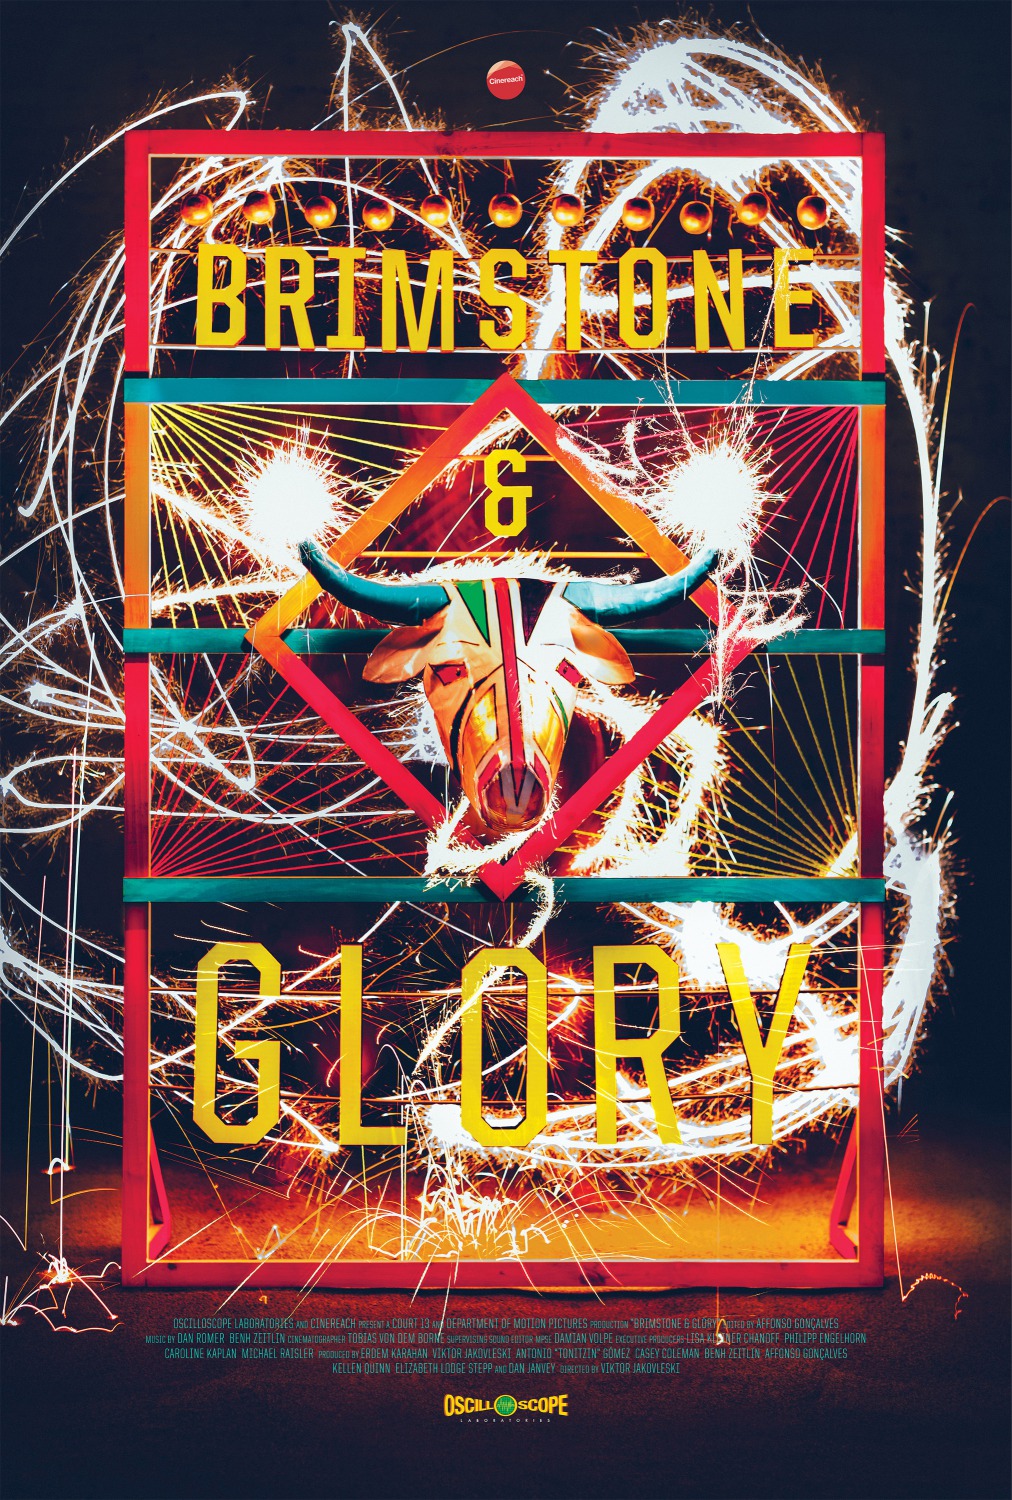 Extra Large Movie Poster Image for Brimstone & Glory 